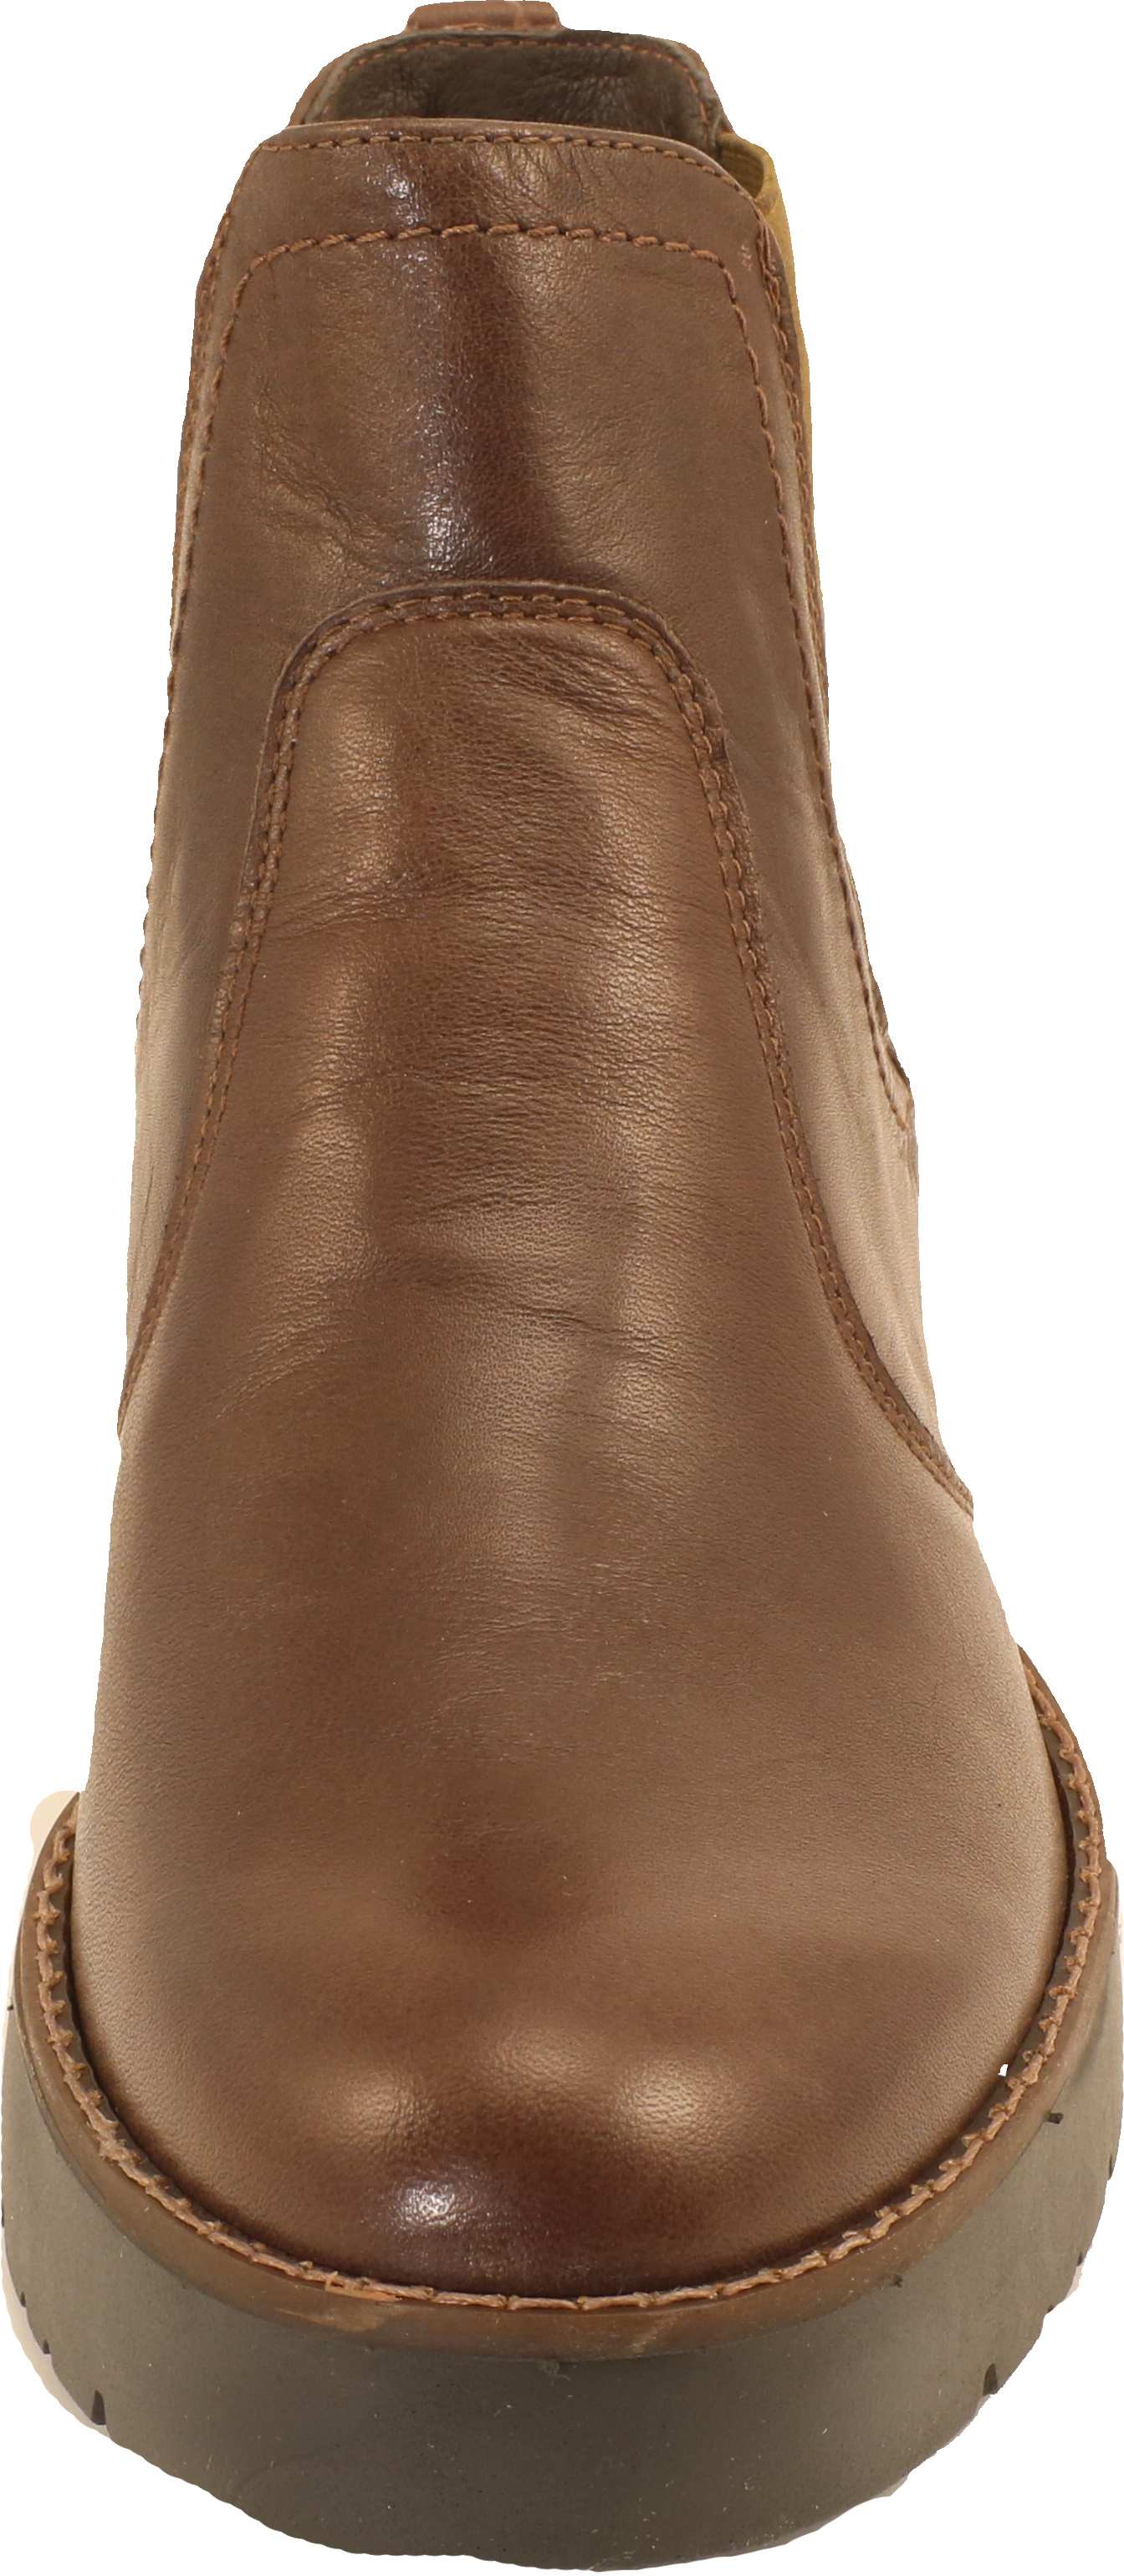 Dbk 81516 - Brown Calf leather